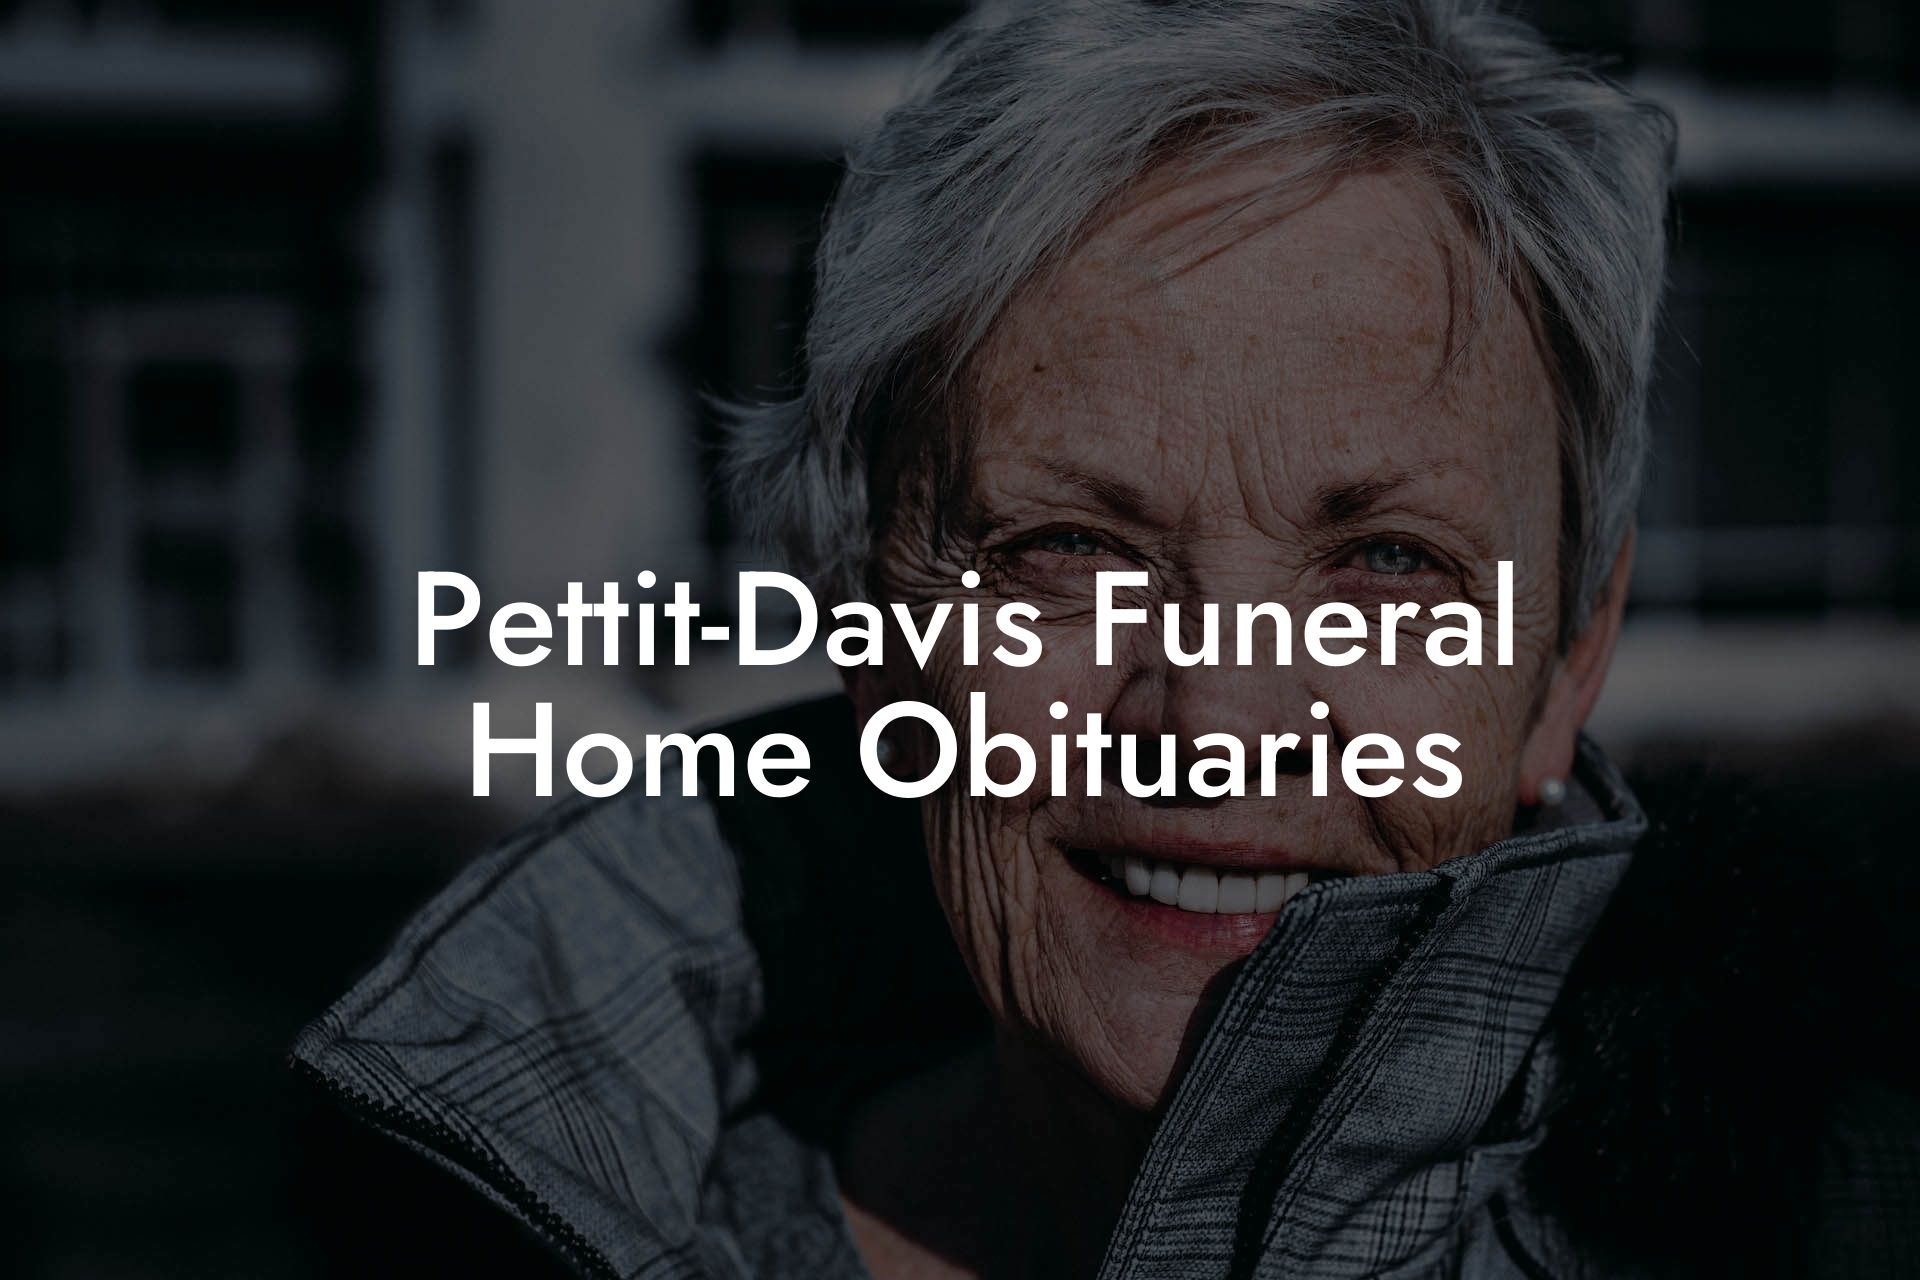 Pettit-Davis Funeral Home Obituaries